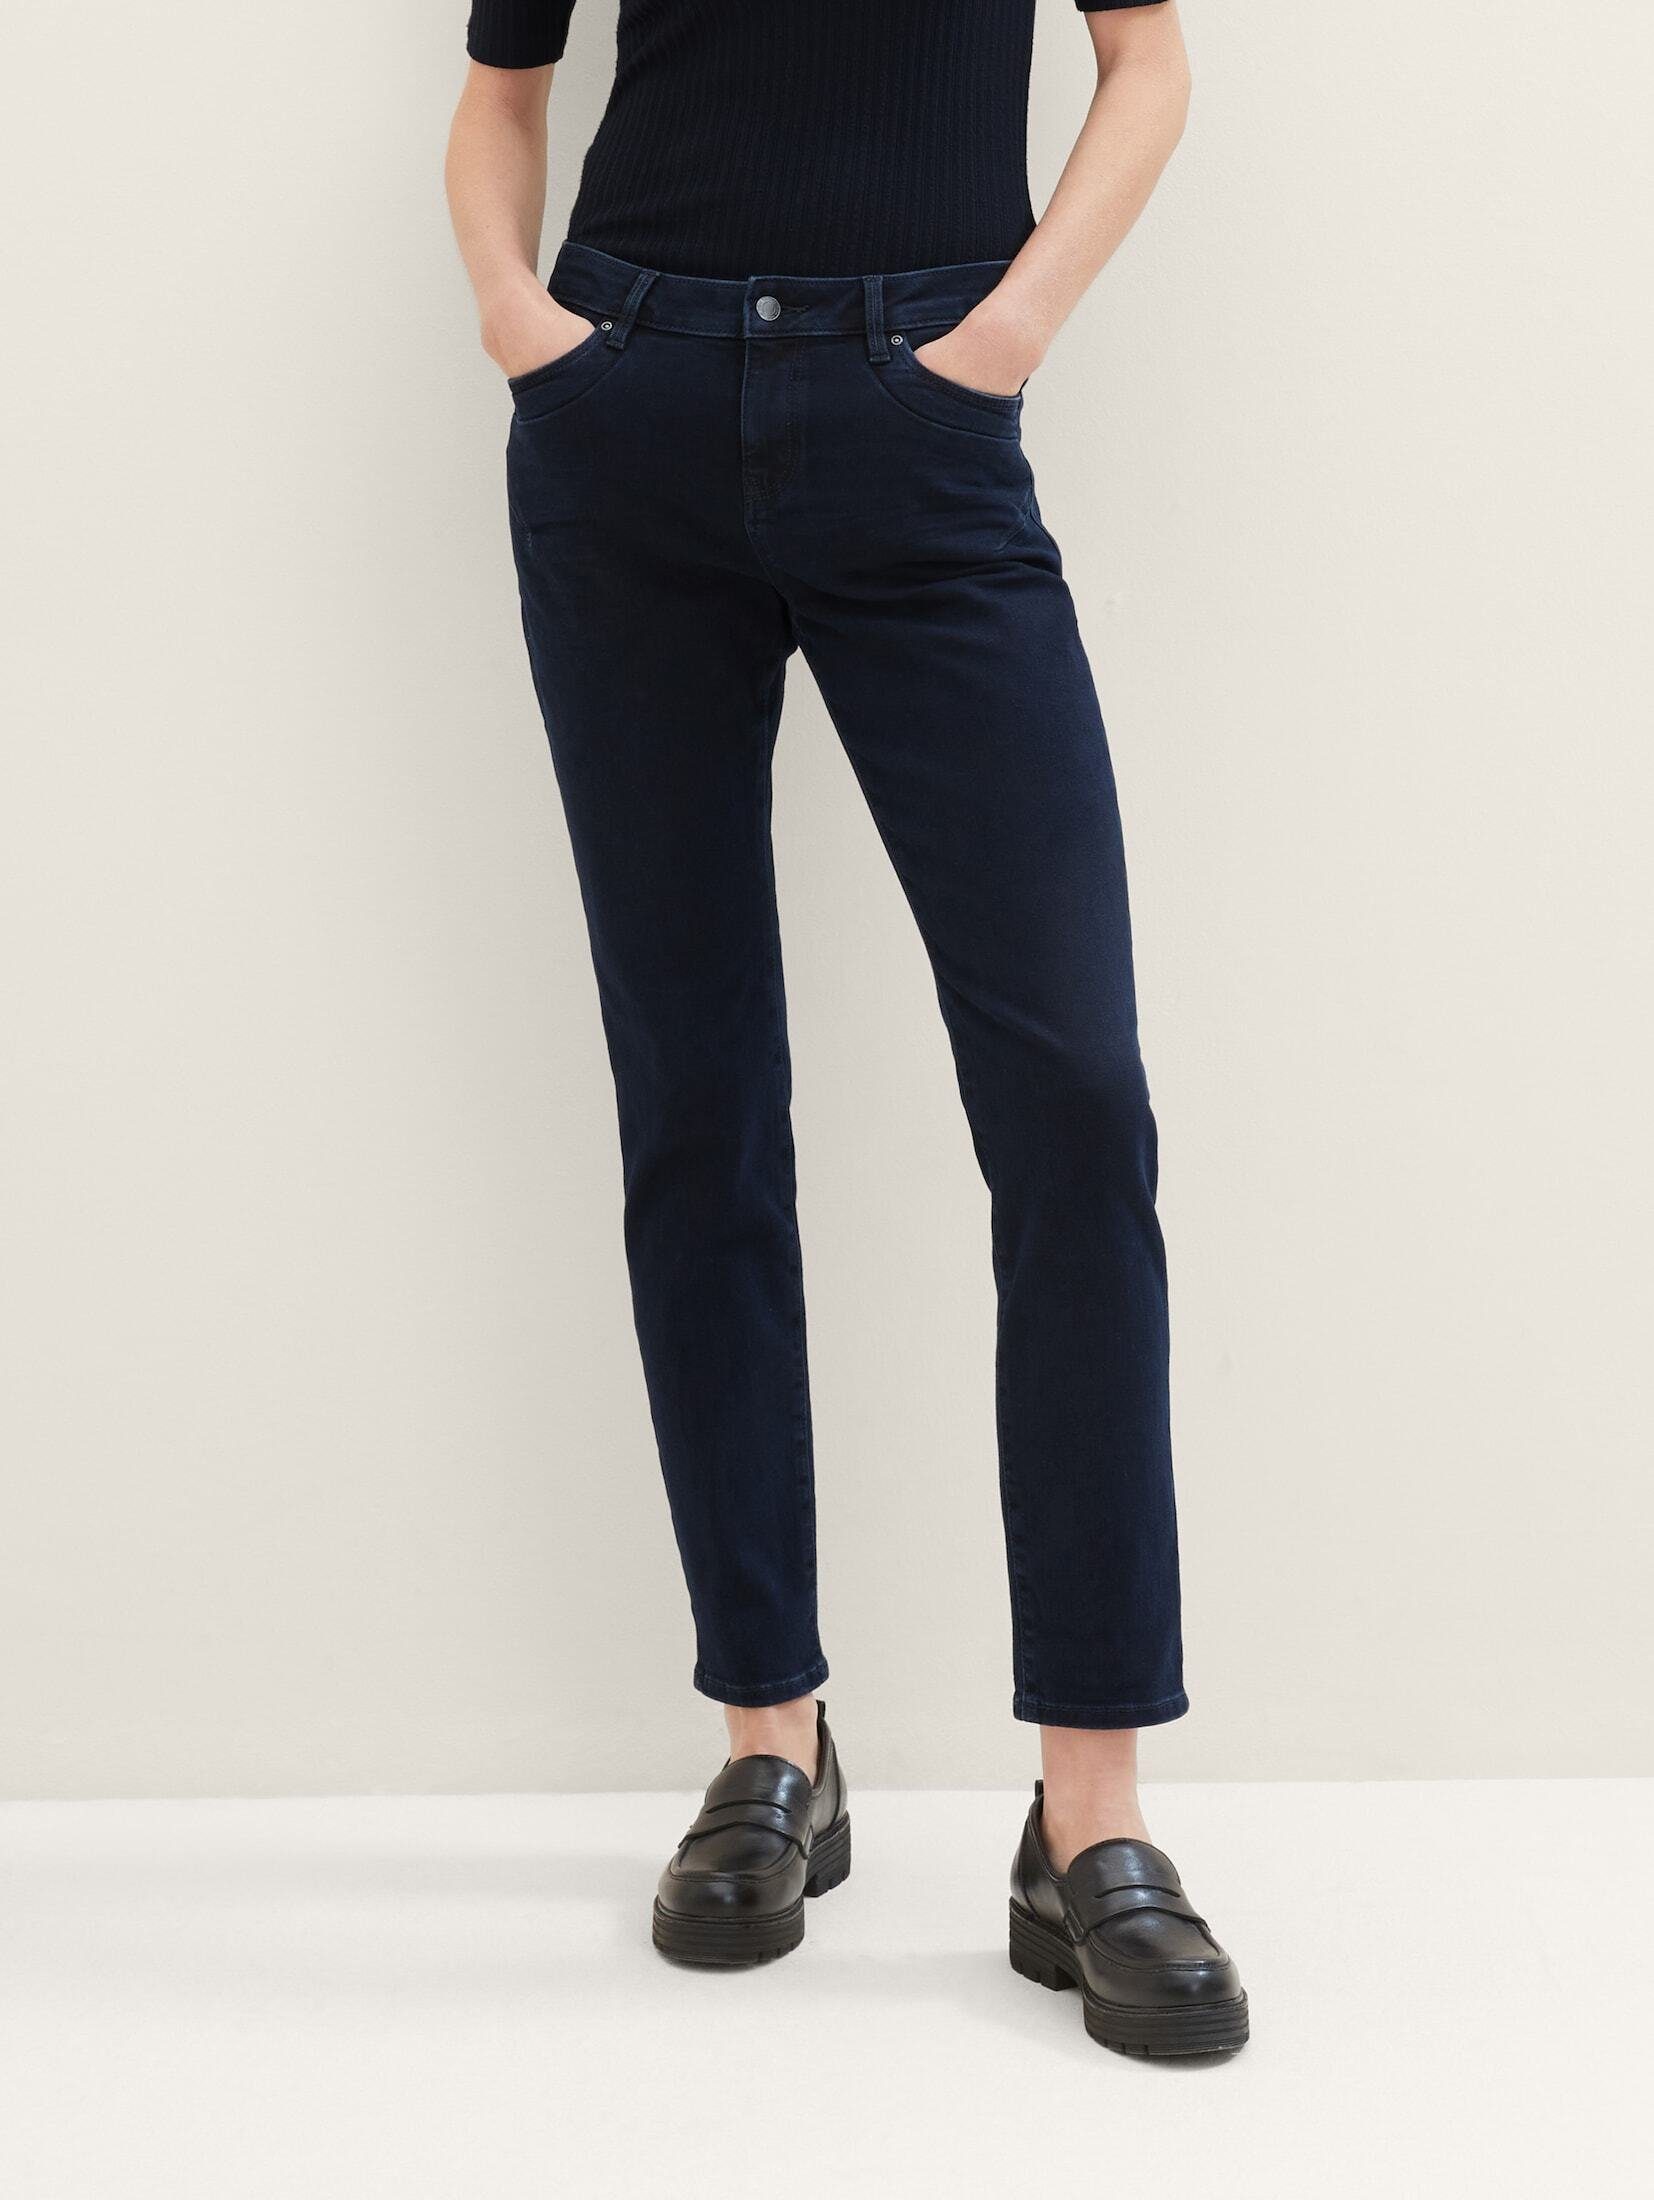 TOM TAILOR blue Jeans Skinny-fit-Jeans dark Tapered denim black stone